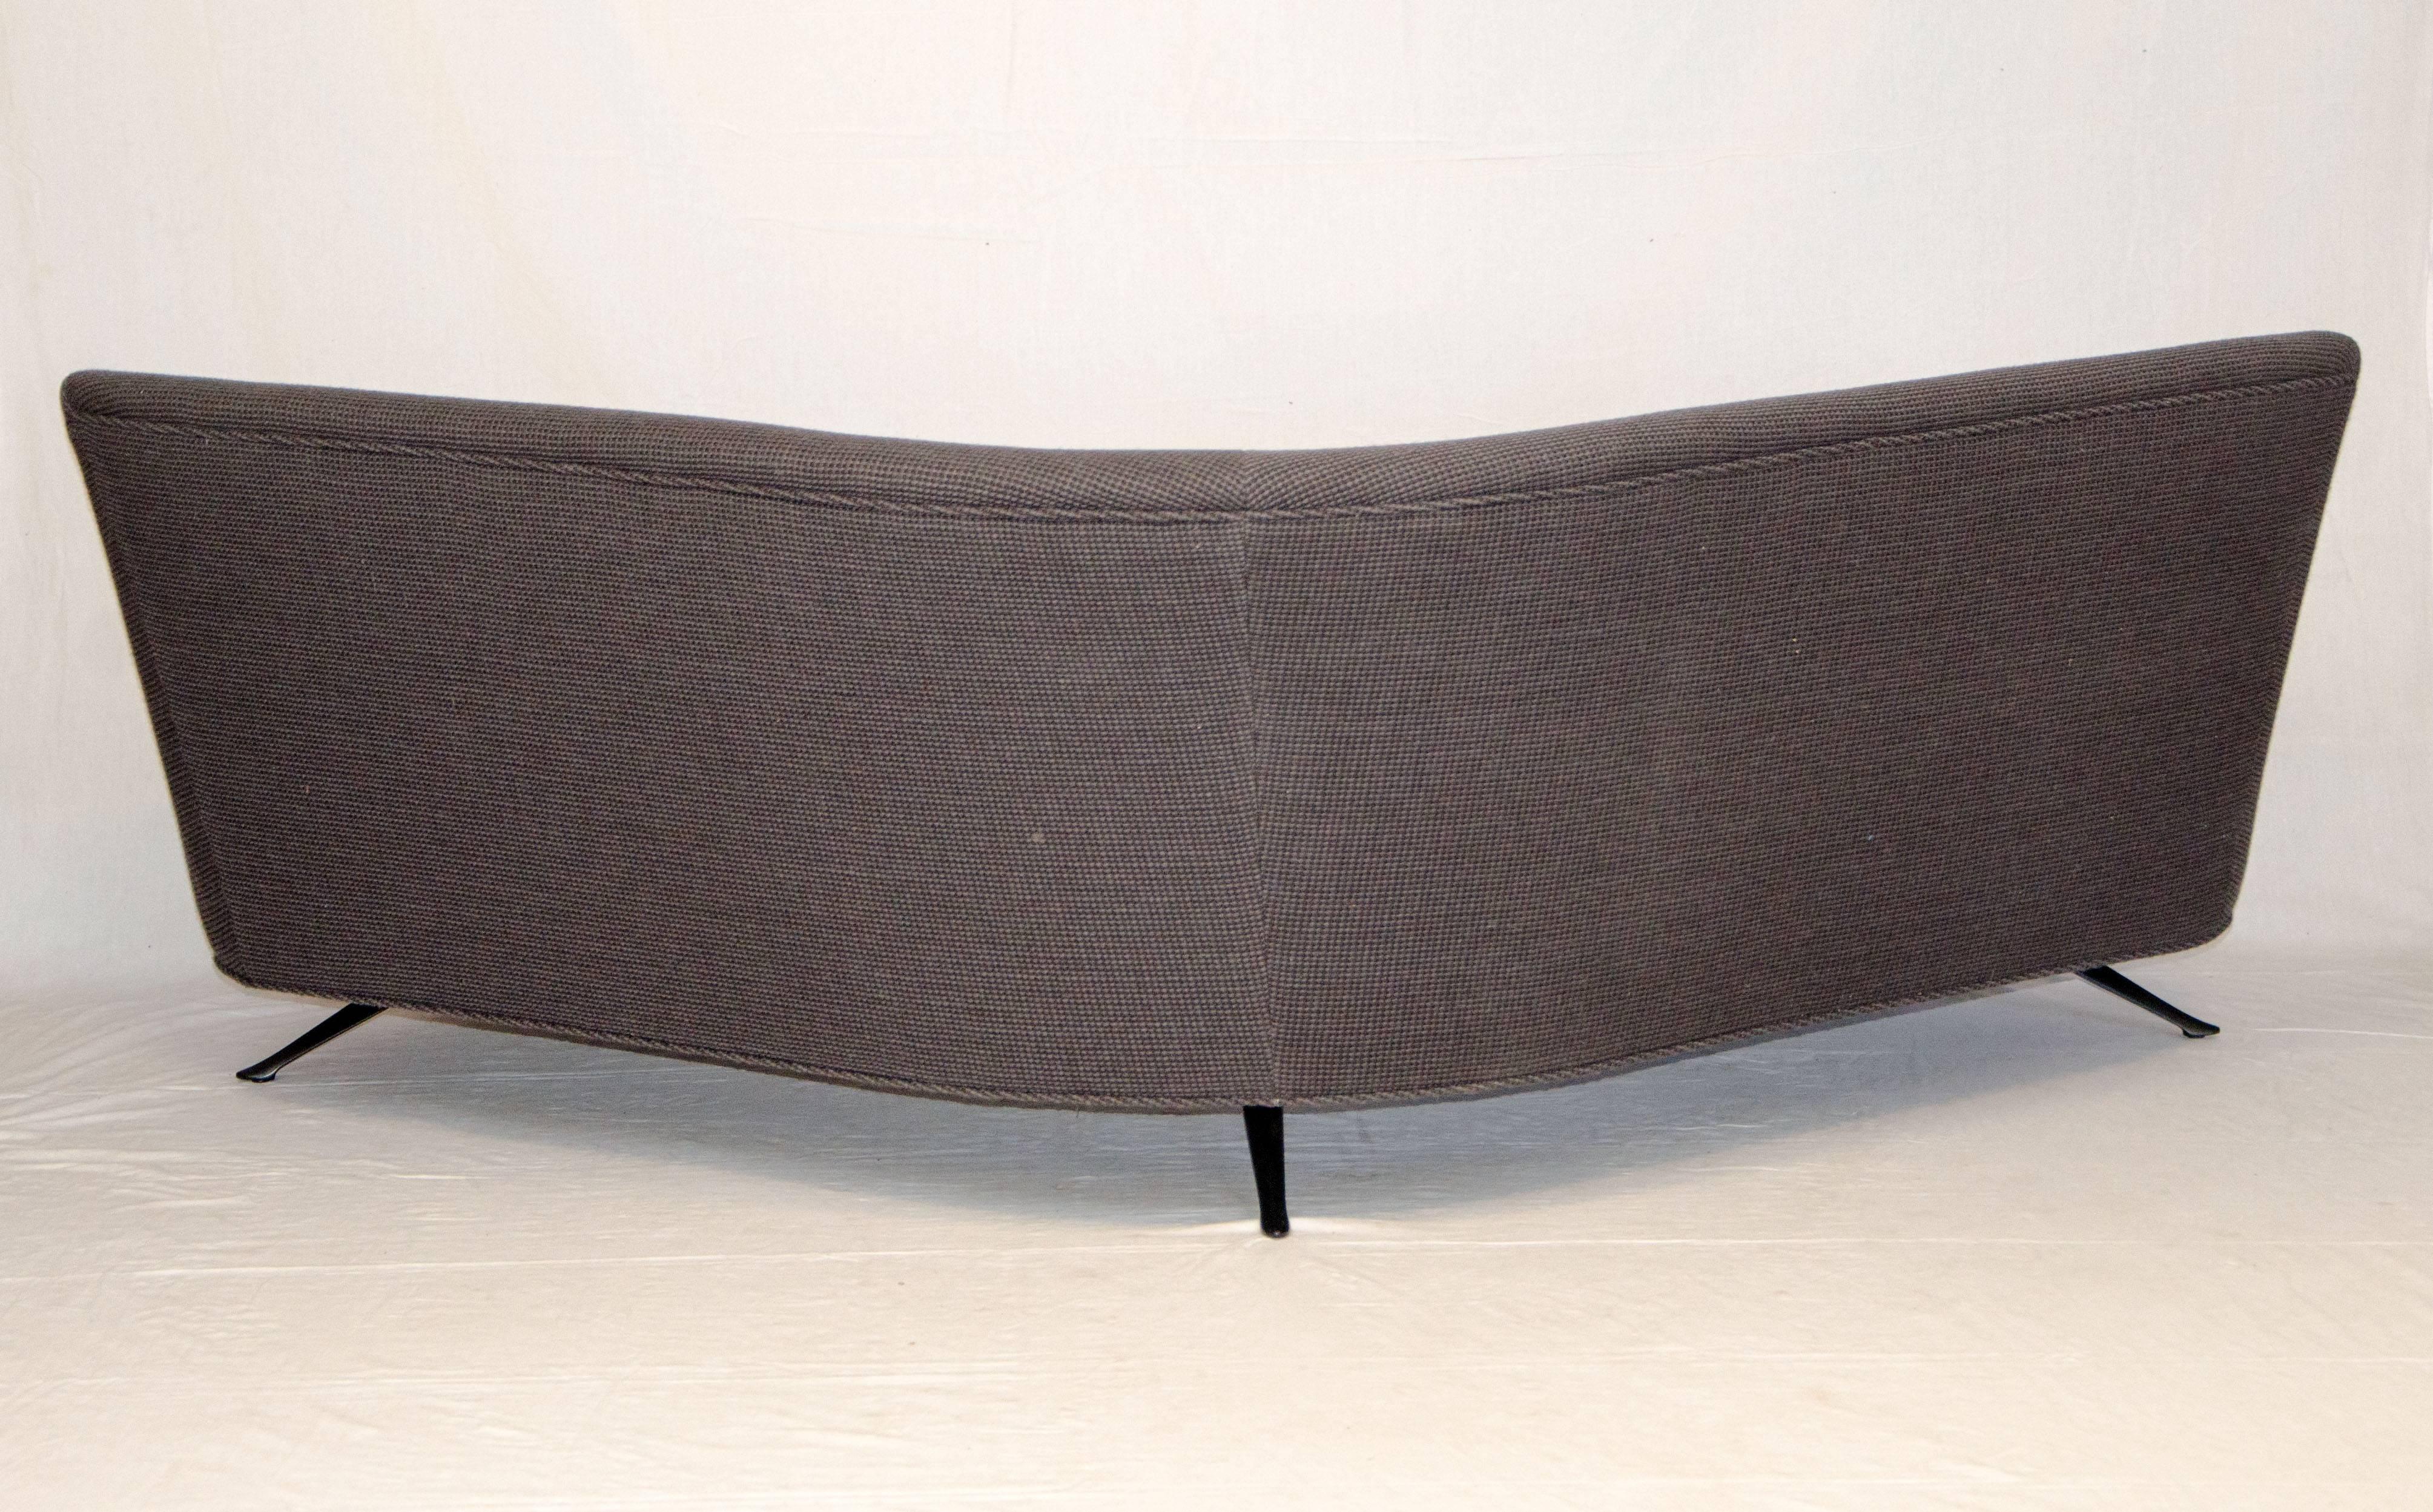 20th Century Italian Curved Sofa, Knoll Fabric, Attributed to Gio Ponti